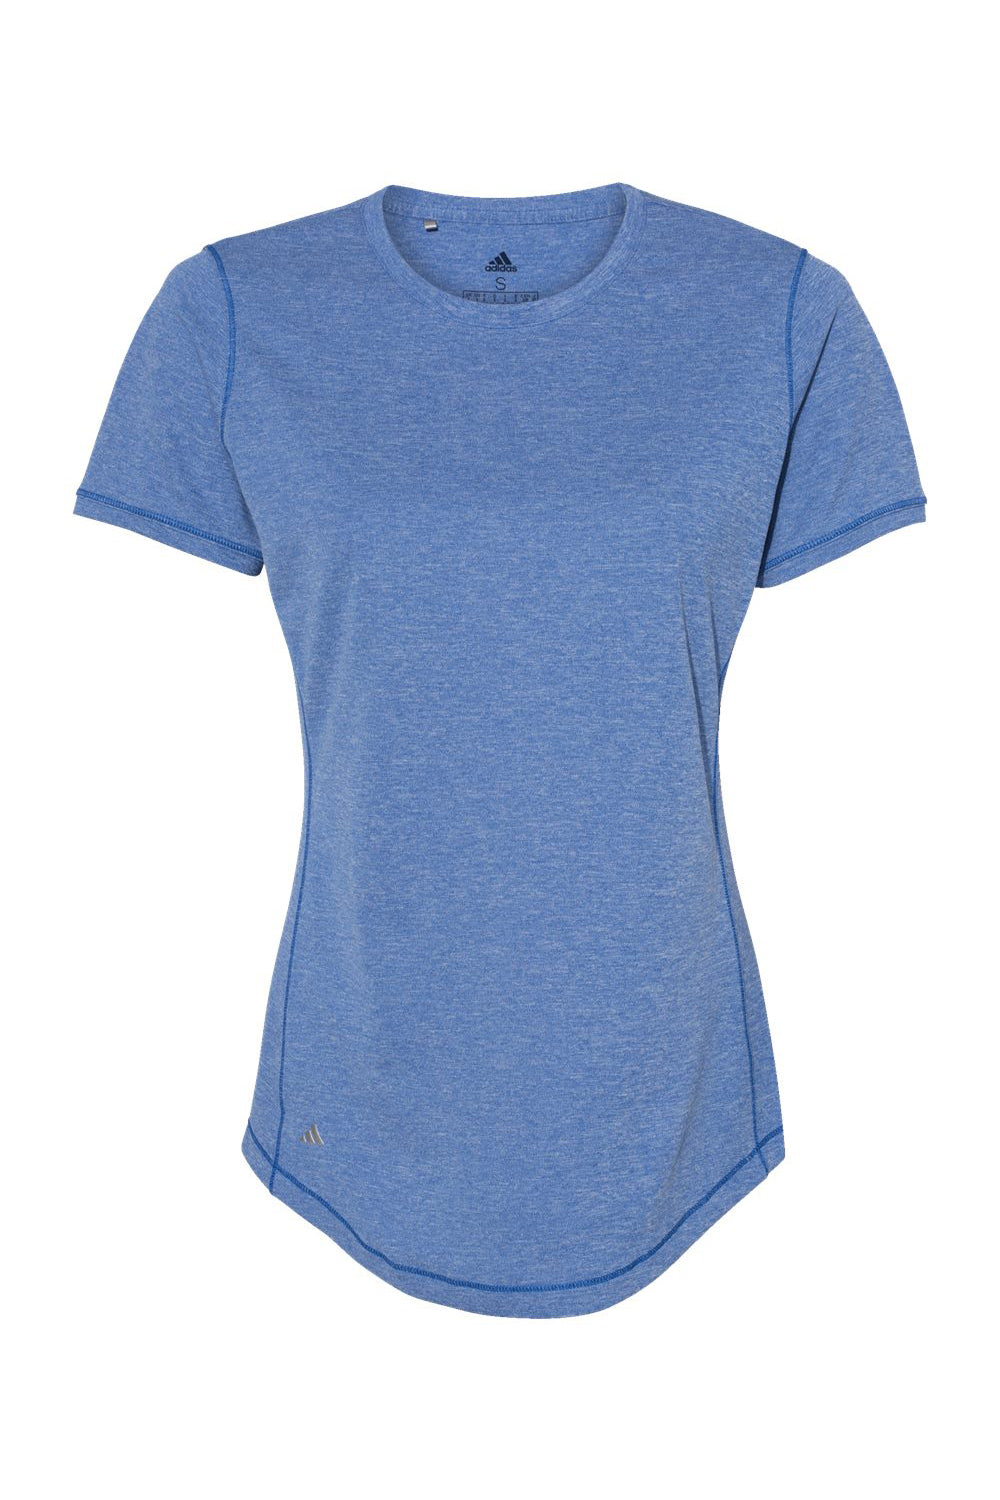 Adidas A377 Womens UPF 50+ Short Sleeve Crewneck T-Shirt Heather Collegiate Royal Blue Flat Front